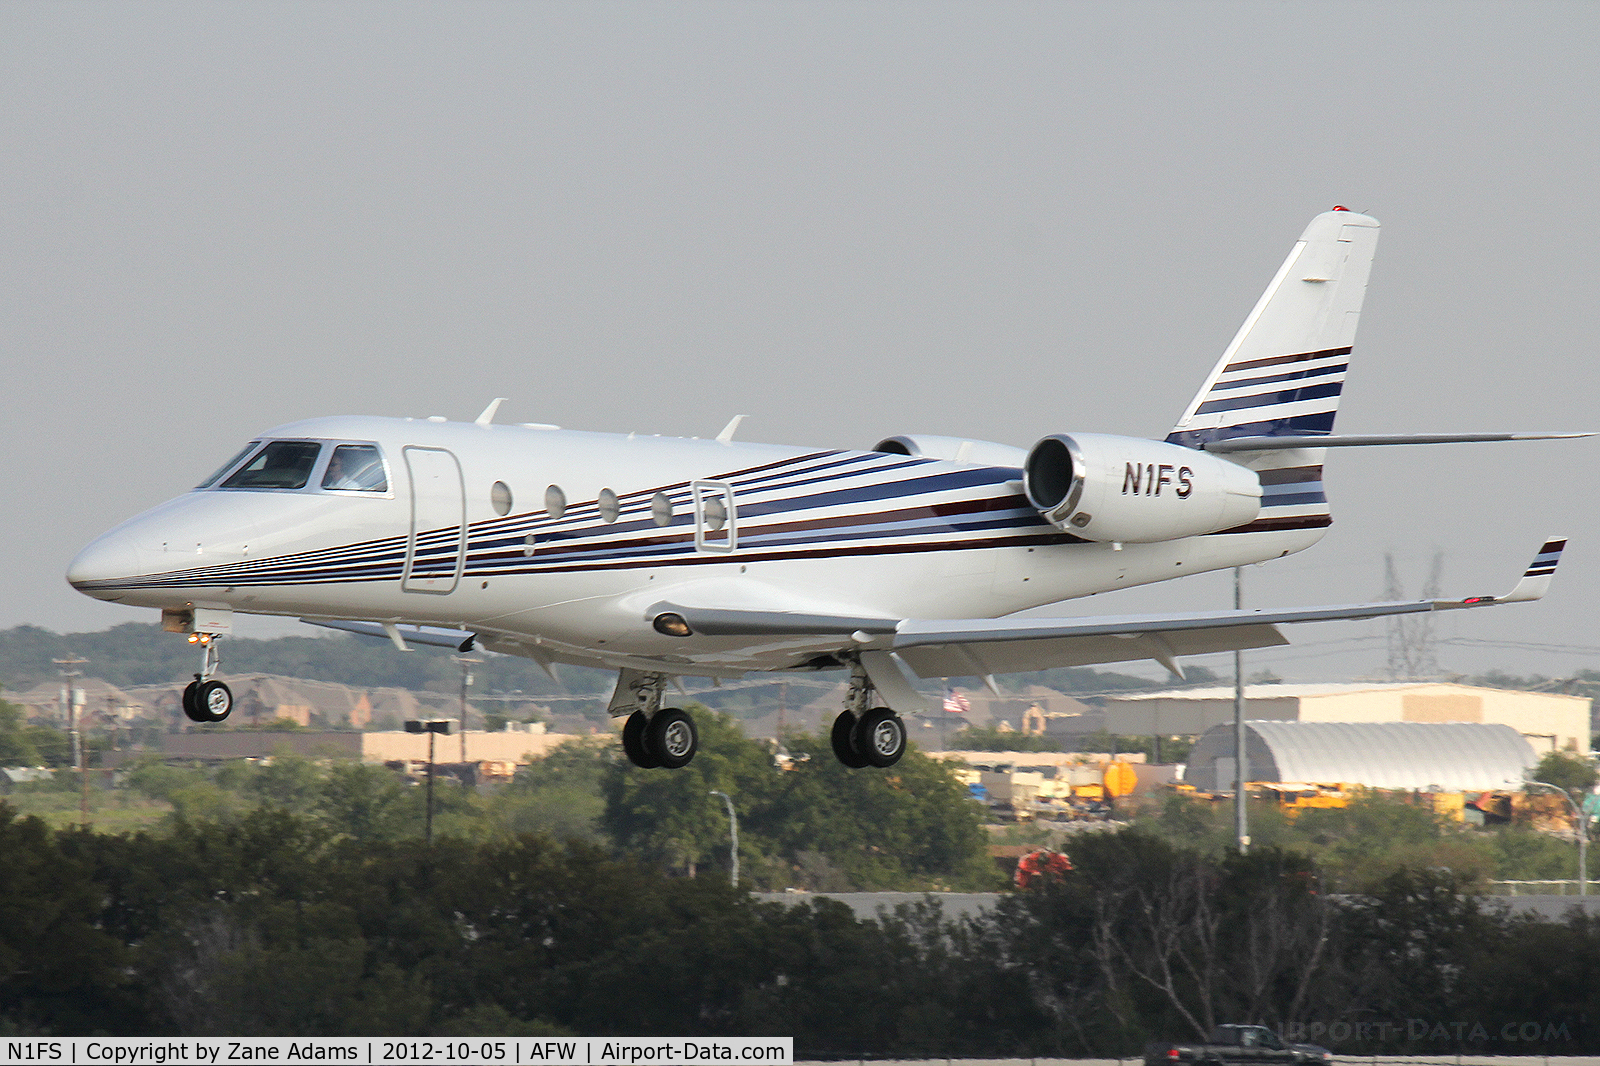 N1FS, Israel Aerospace Industries Gulfstream G150 C/N 277, At the 2012 Alliance Airshow - Fort Worth, TX